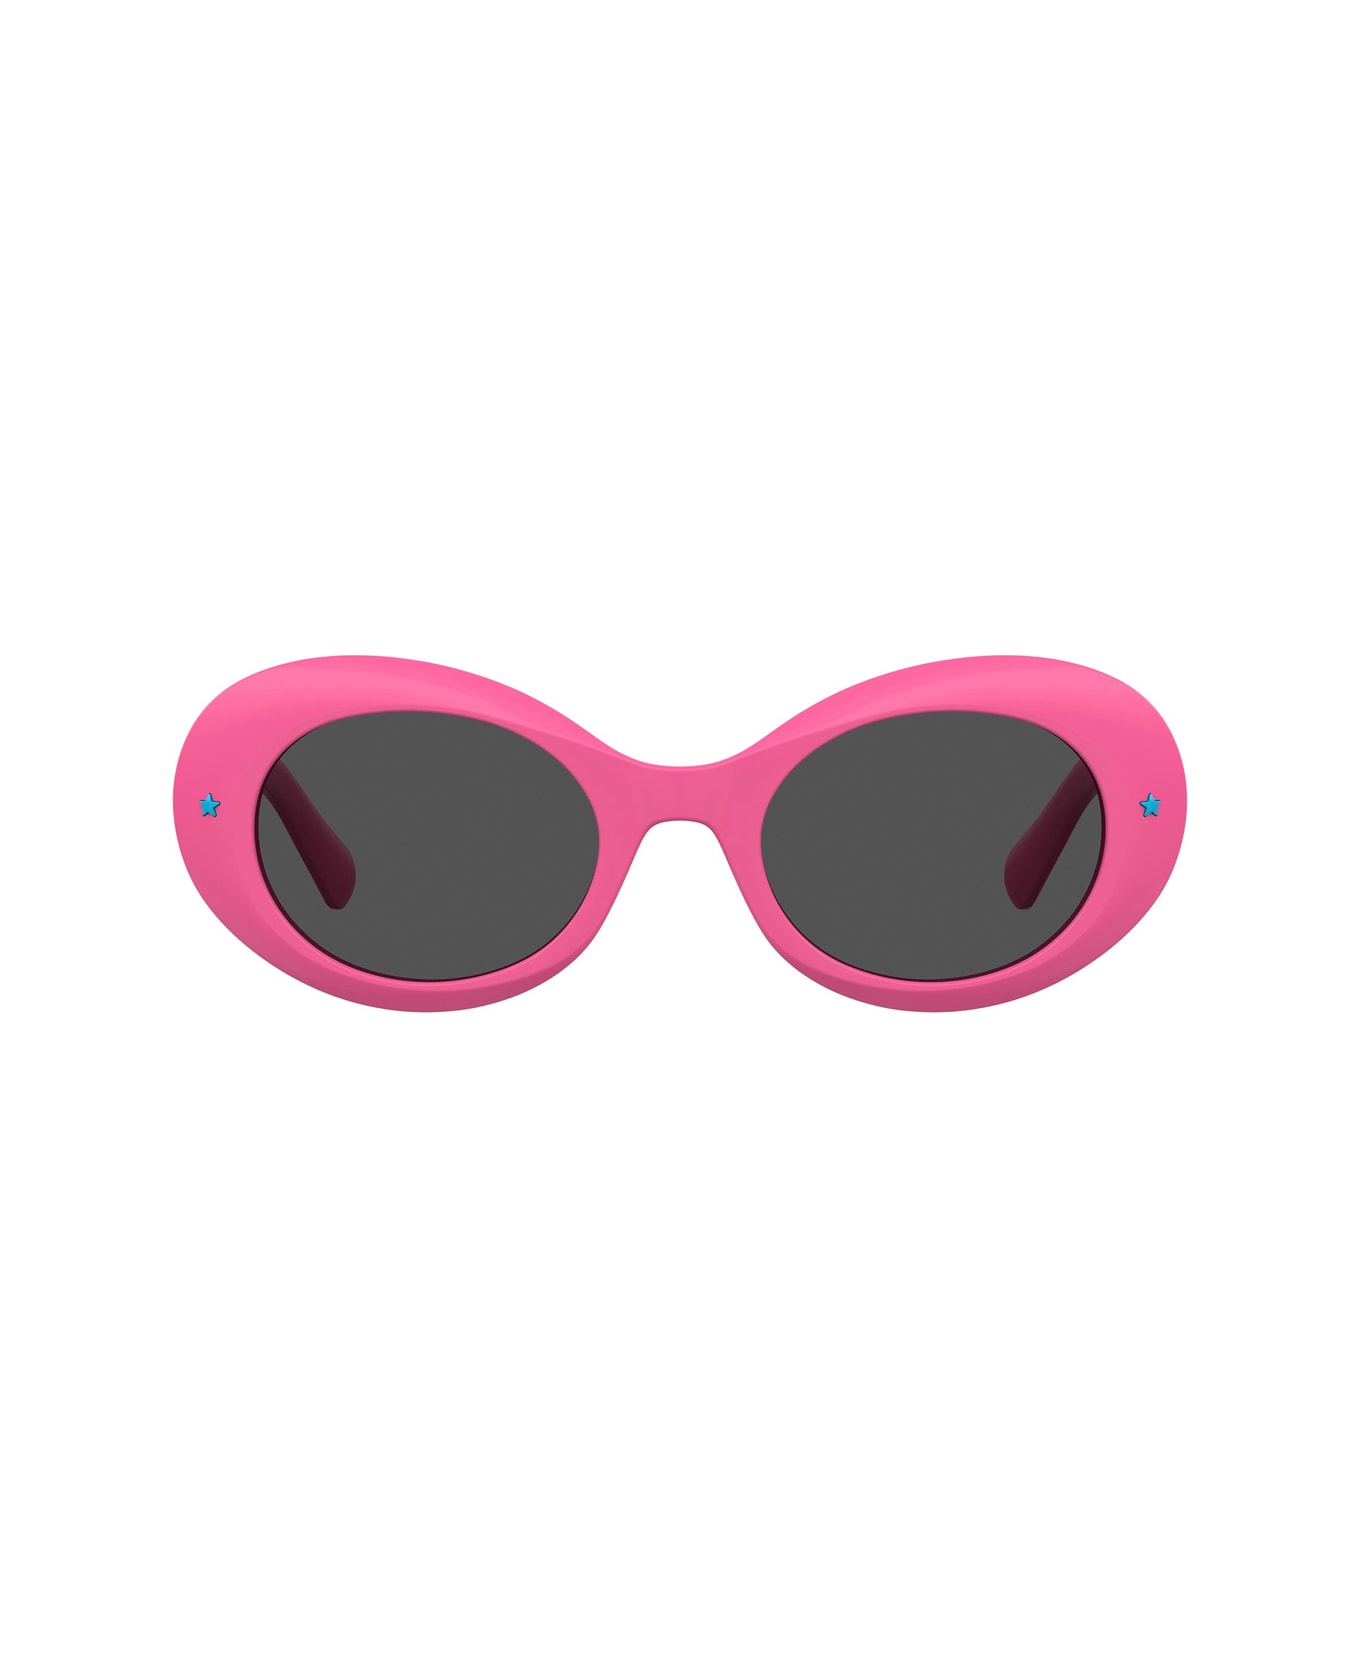 Chiara Ferragni Cf 7004/s Sunglasses - Rosa サングラス